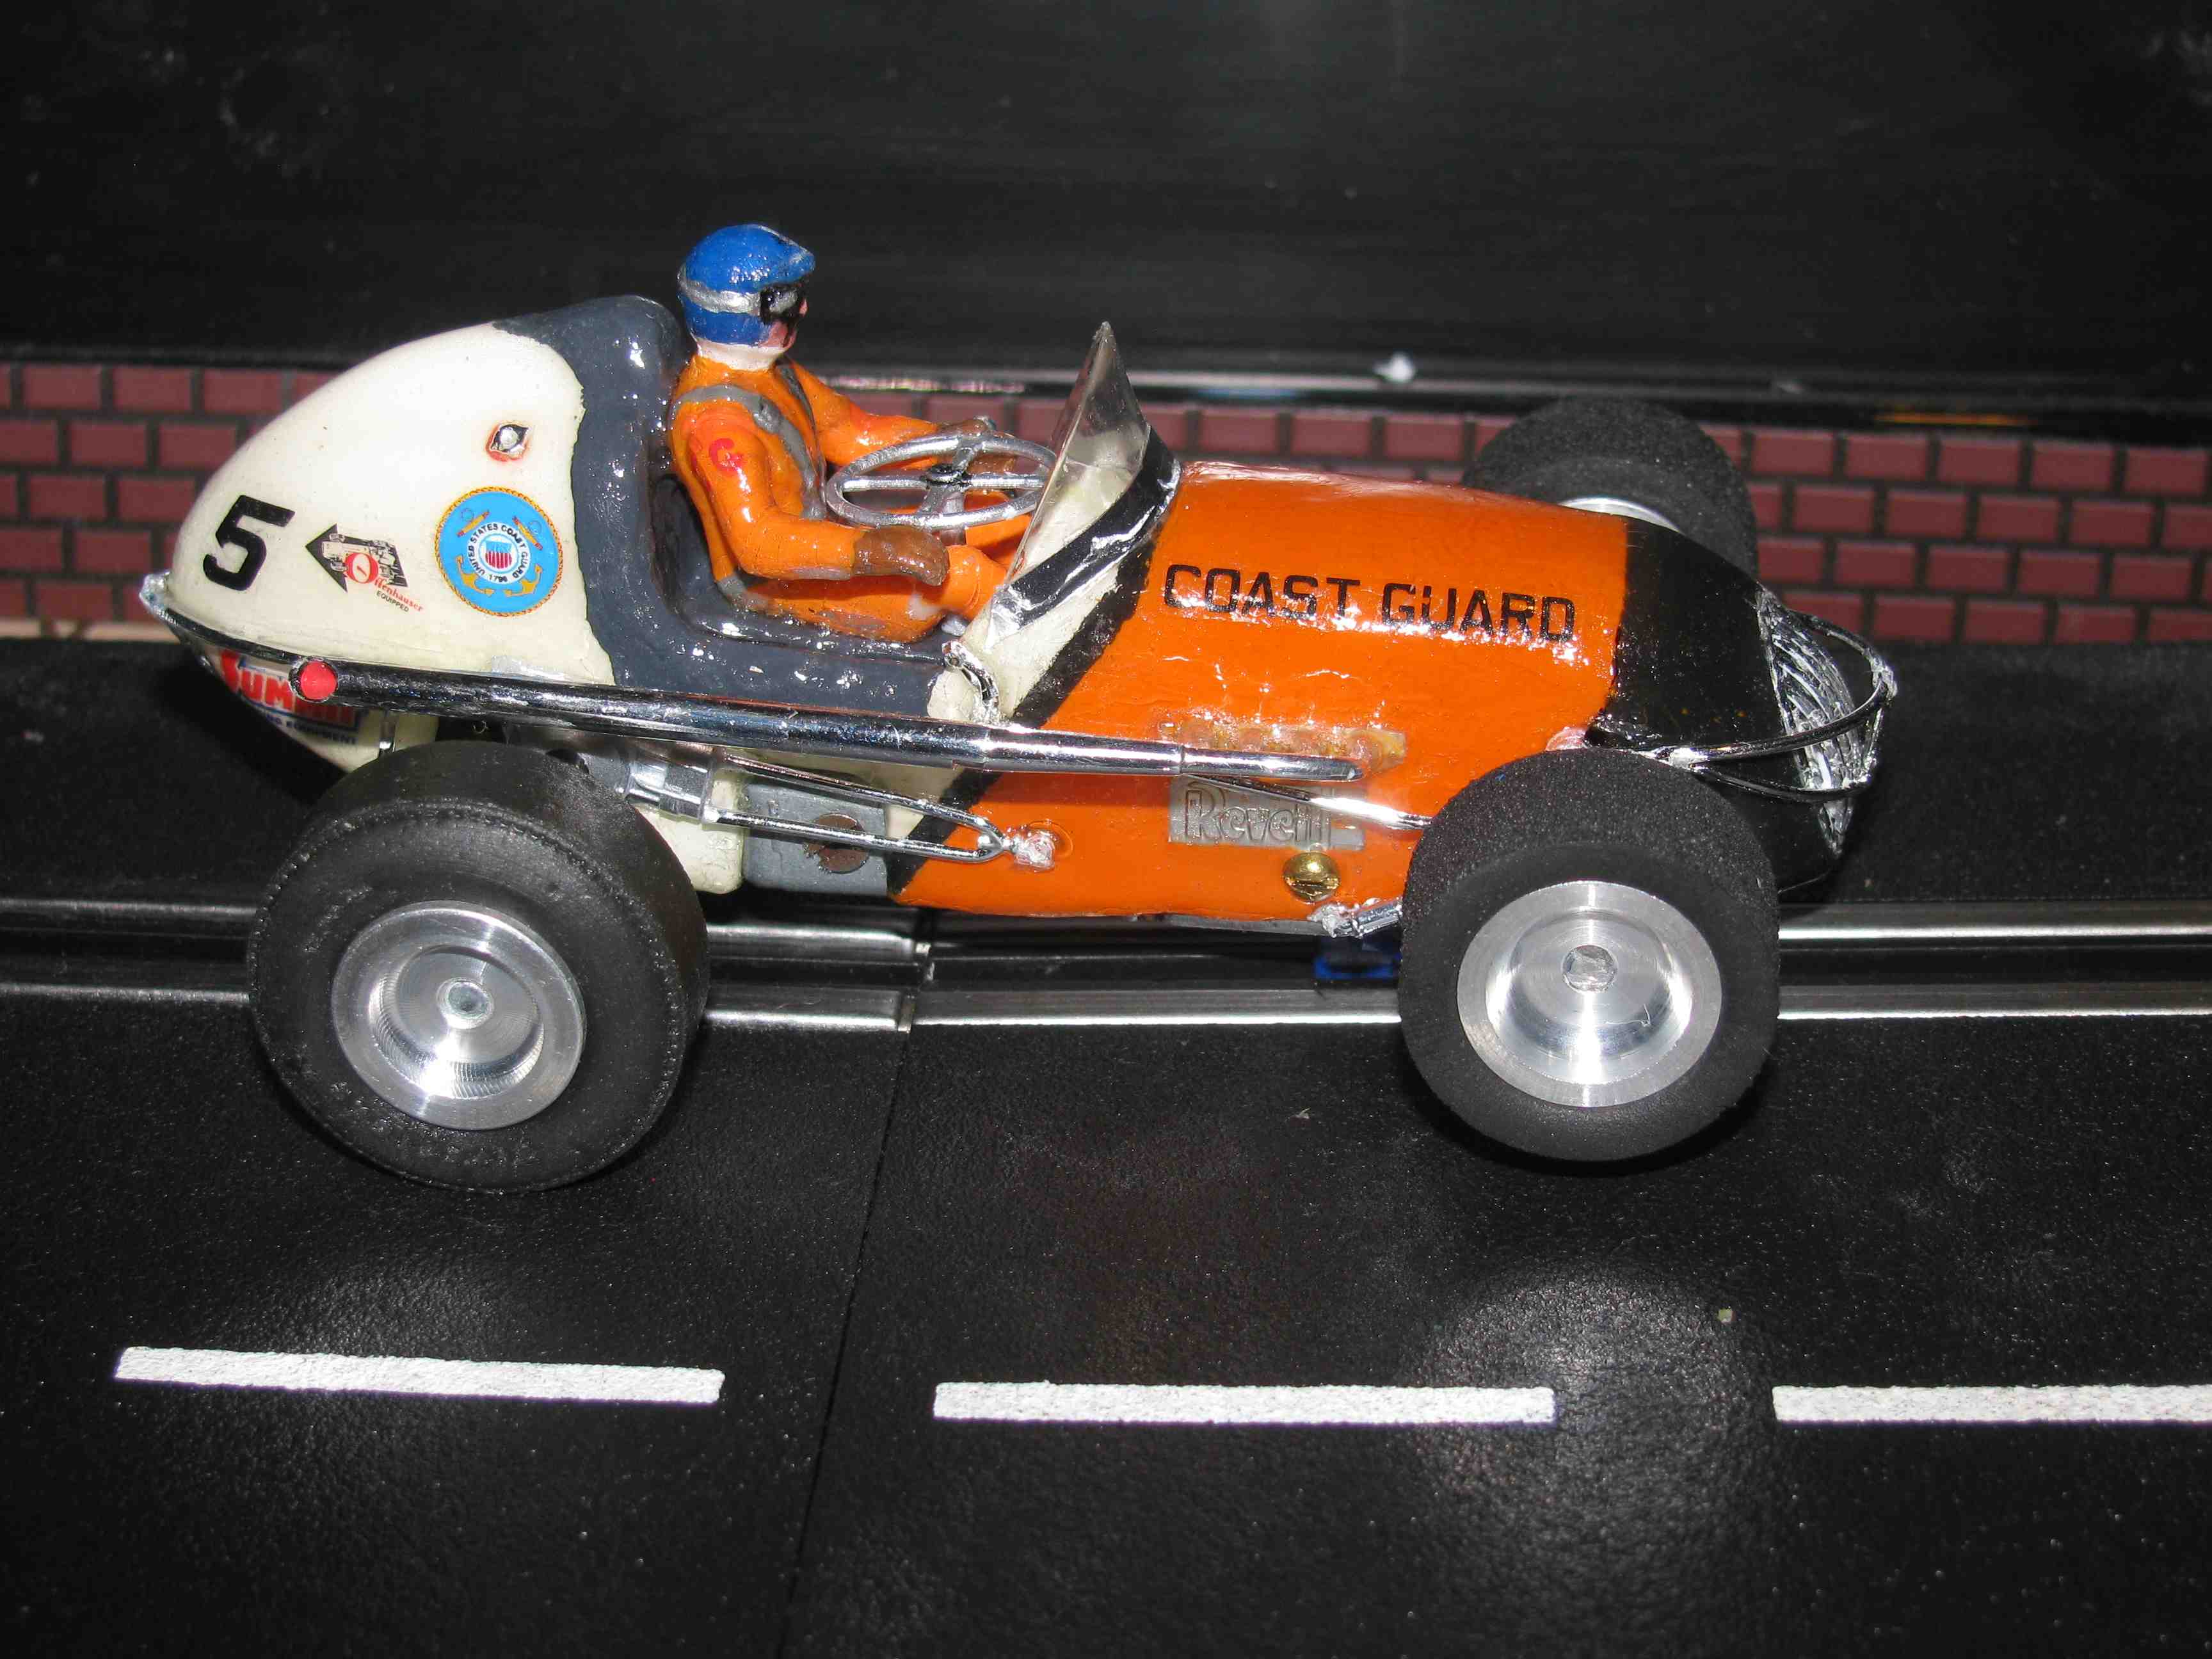 * SOLD * Vintage Revell Midget Racer “Coast Guard” Race Team Slot Car 1/32 Scale – White/Orange – Bonus Car #5 (Limited Edition Set - Bonus)